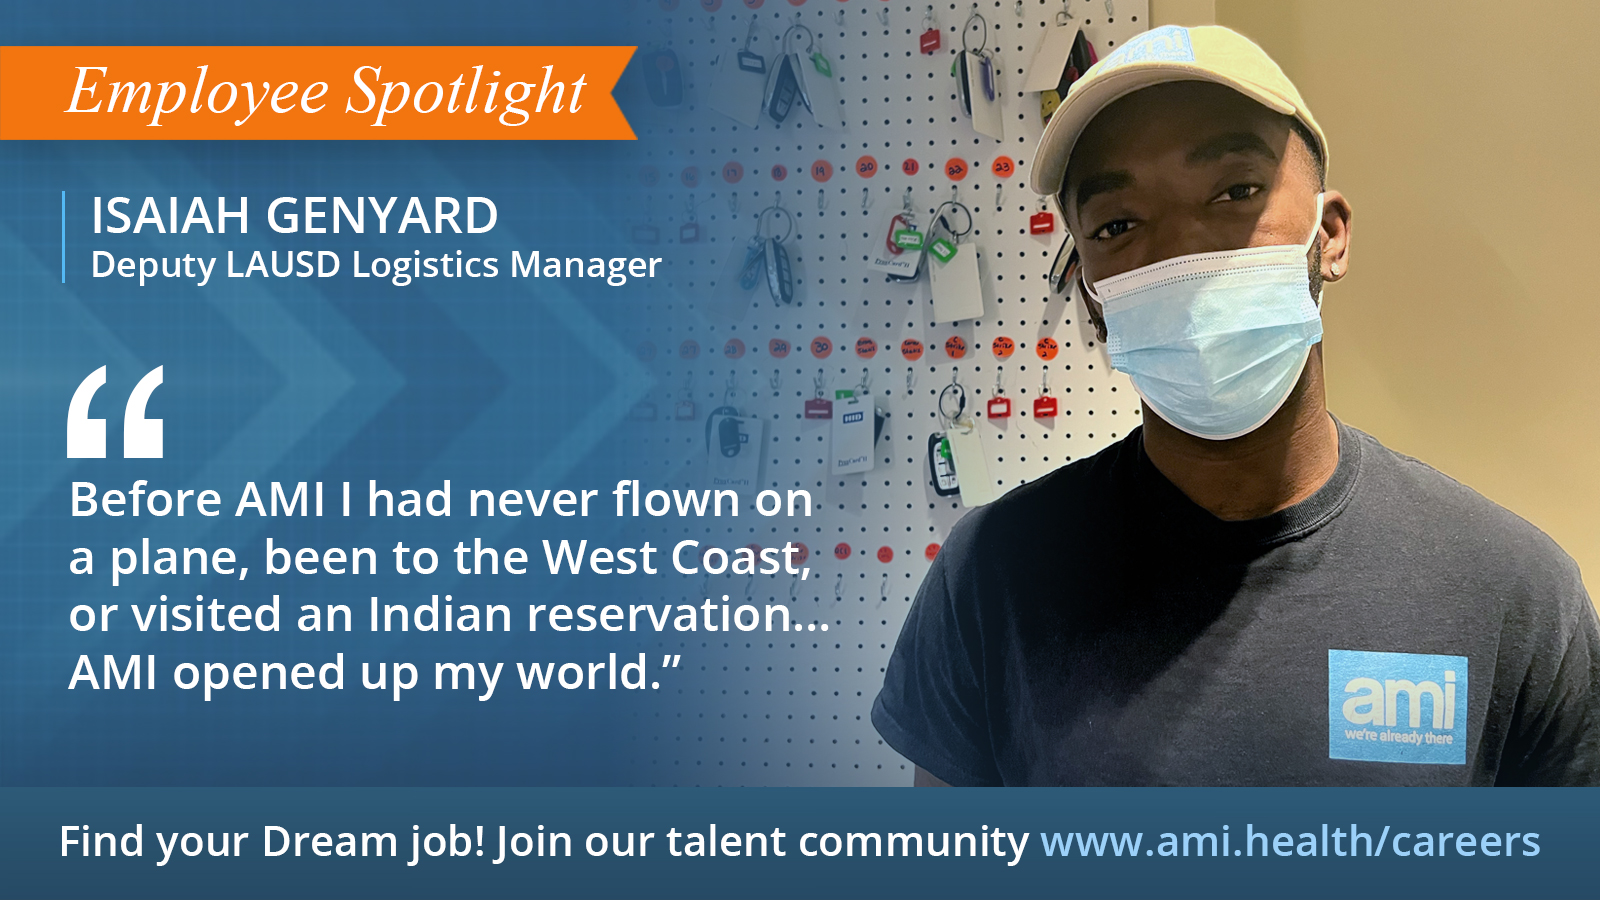 AMI Employee Spotlight on Isaiah Genyard